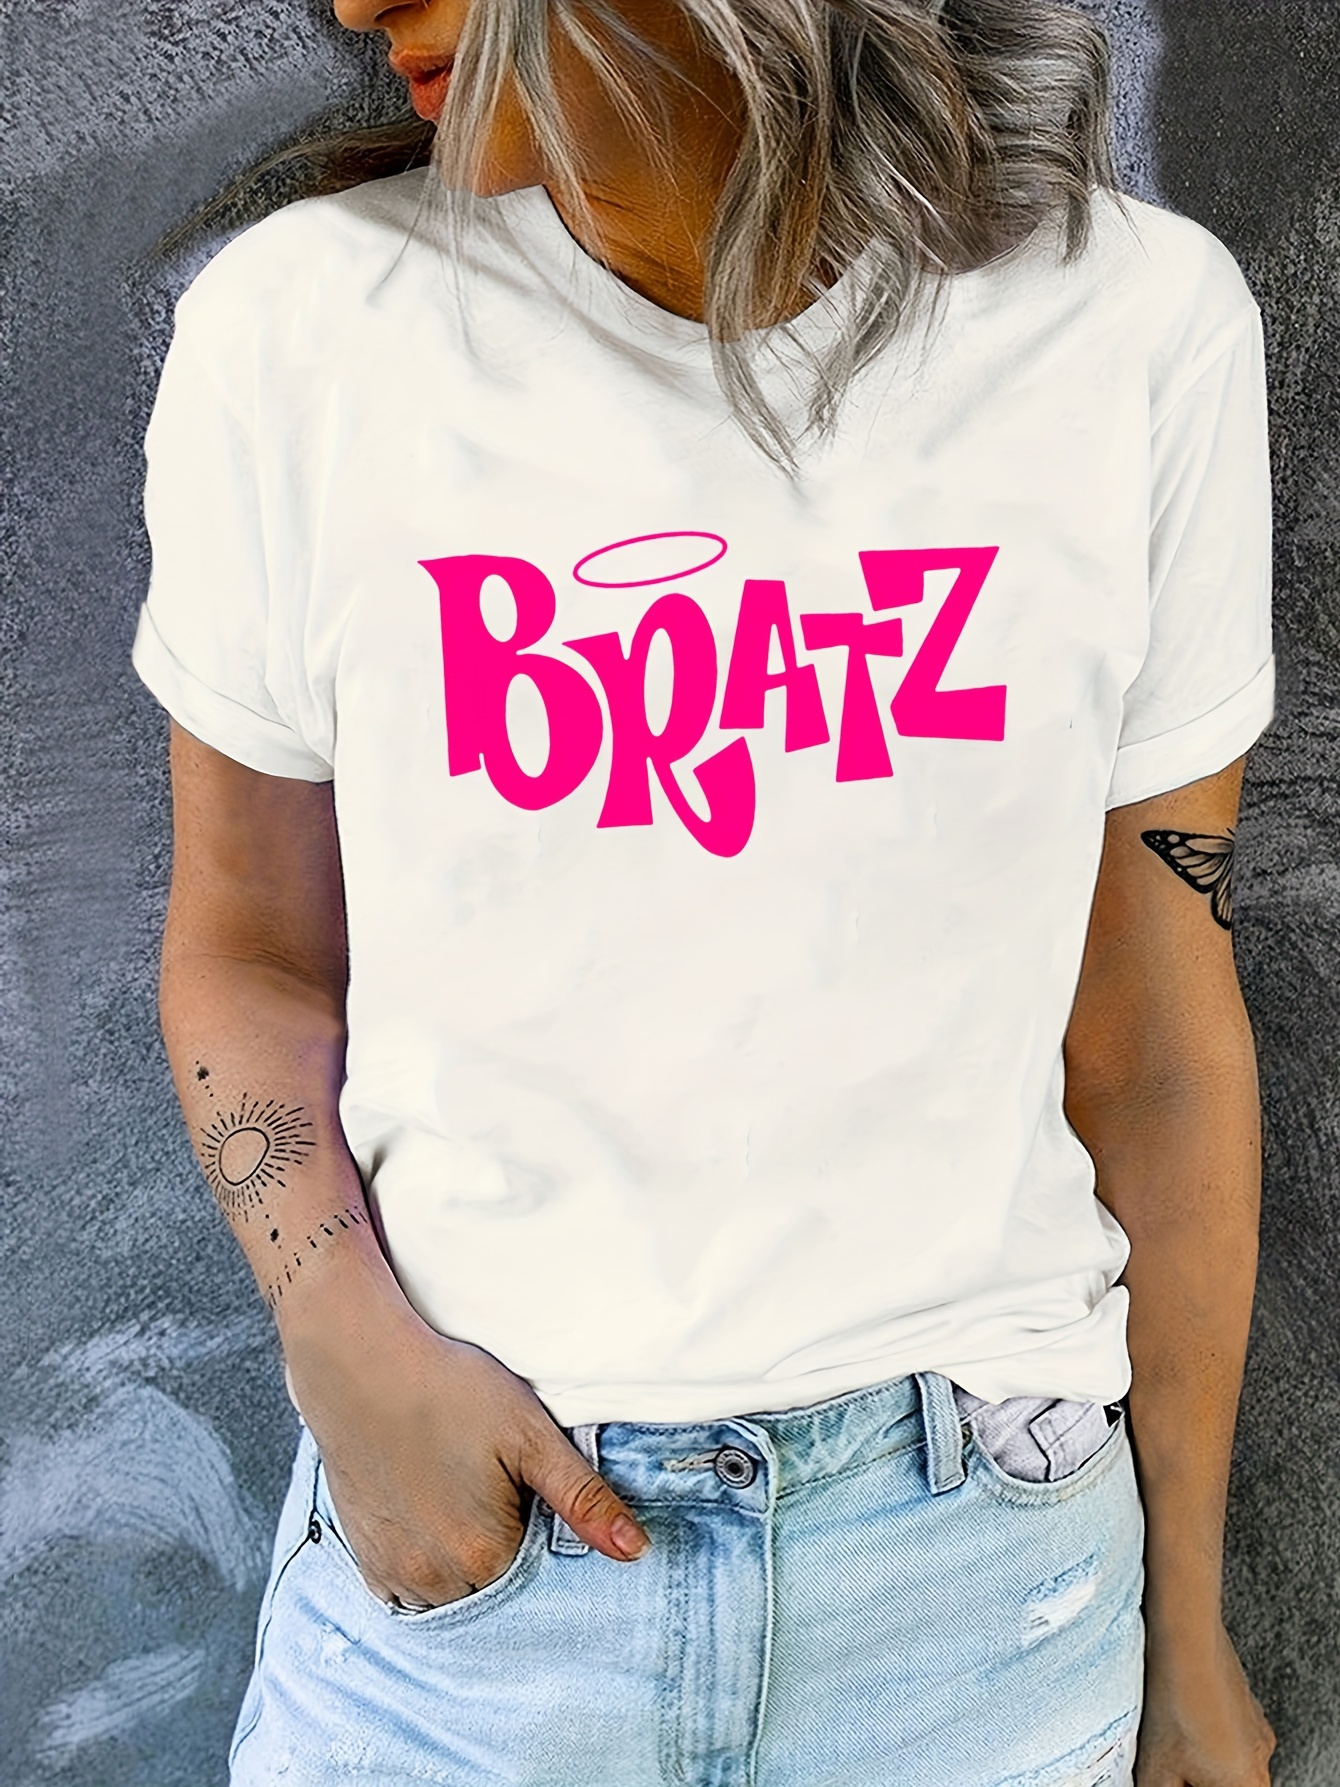 Bratz - Y2K Logo - Butterflies - Women's Short Sleeve Graphic T-Shirt 